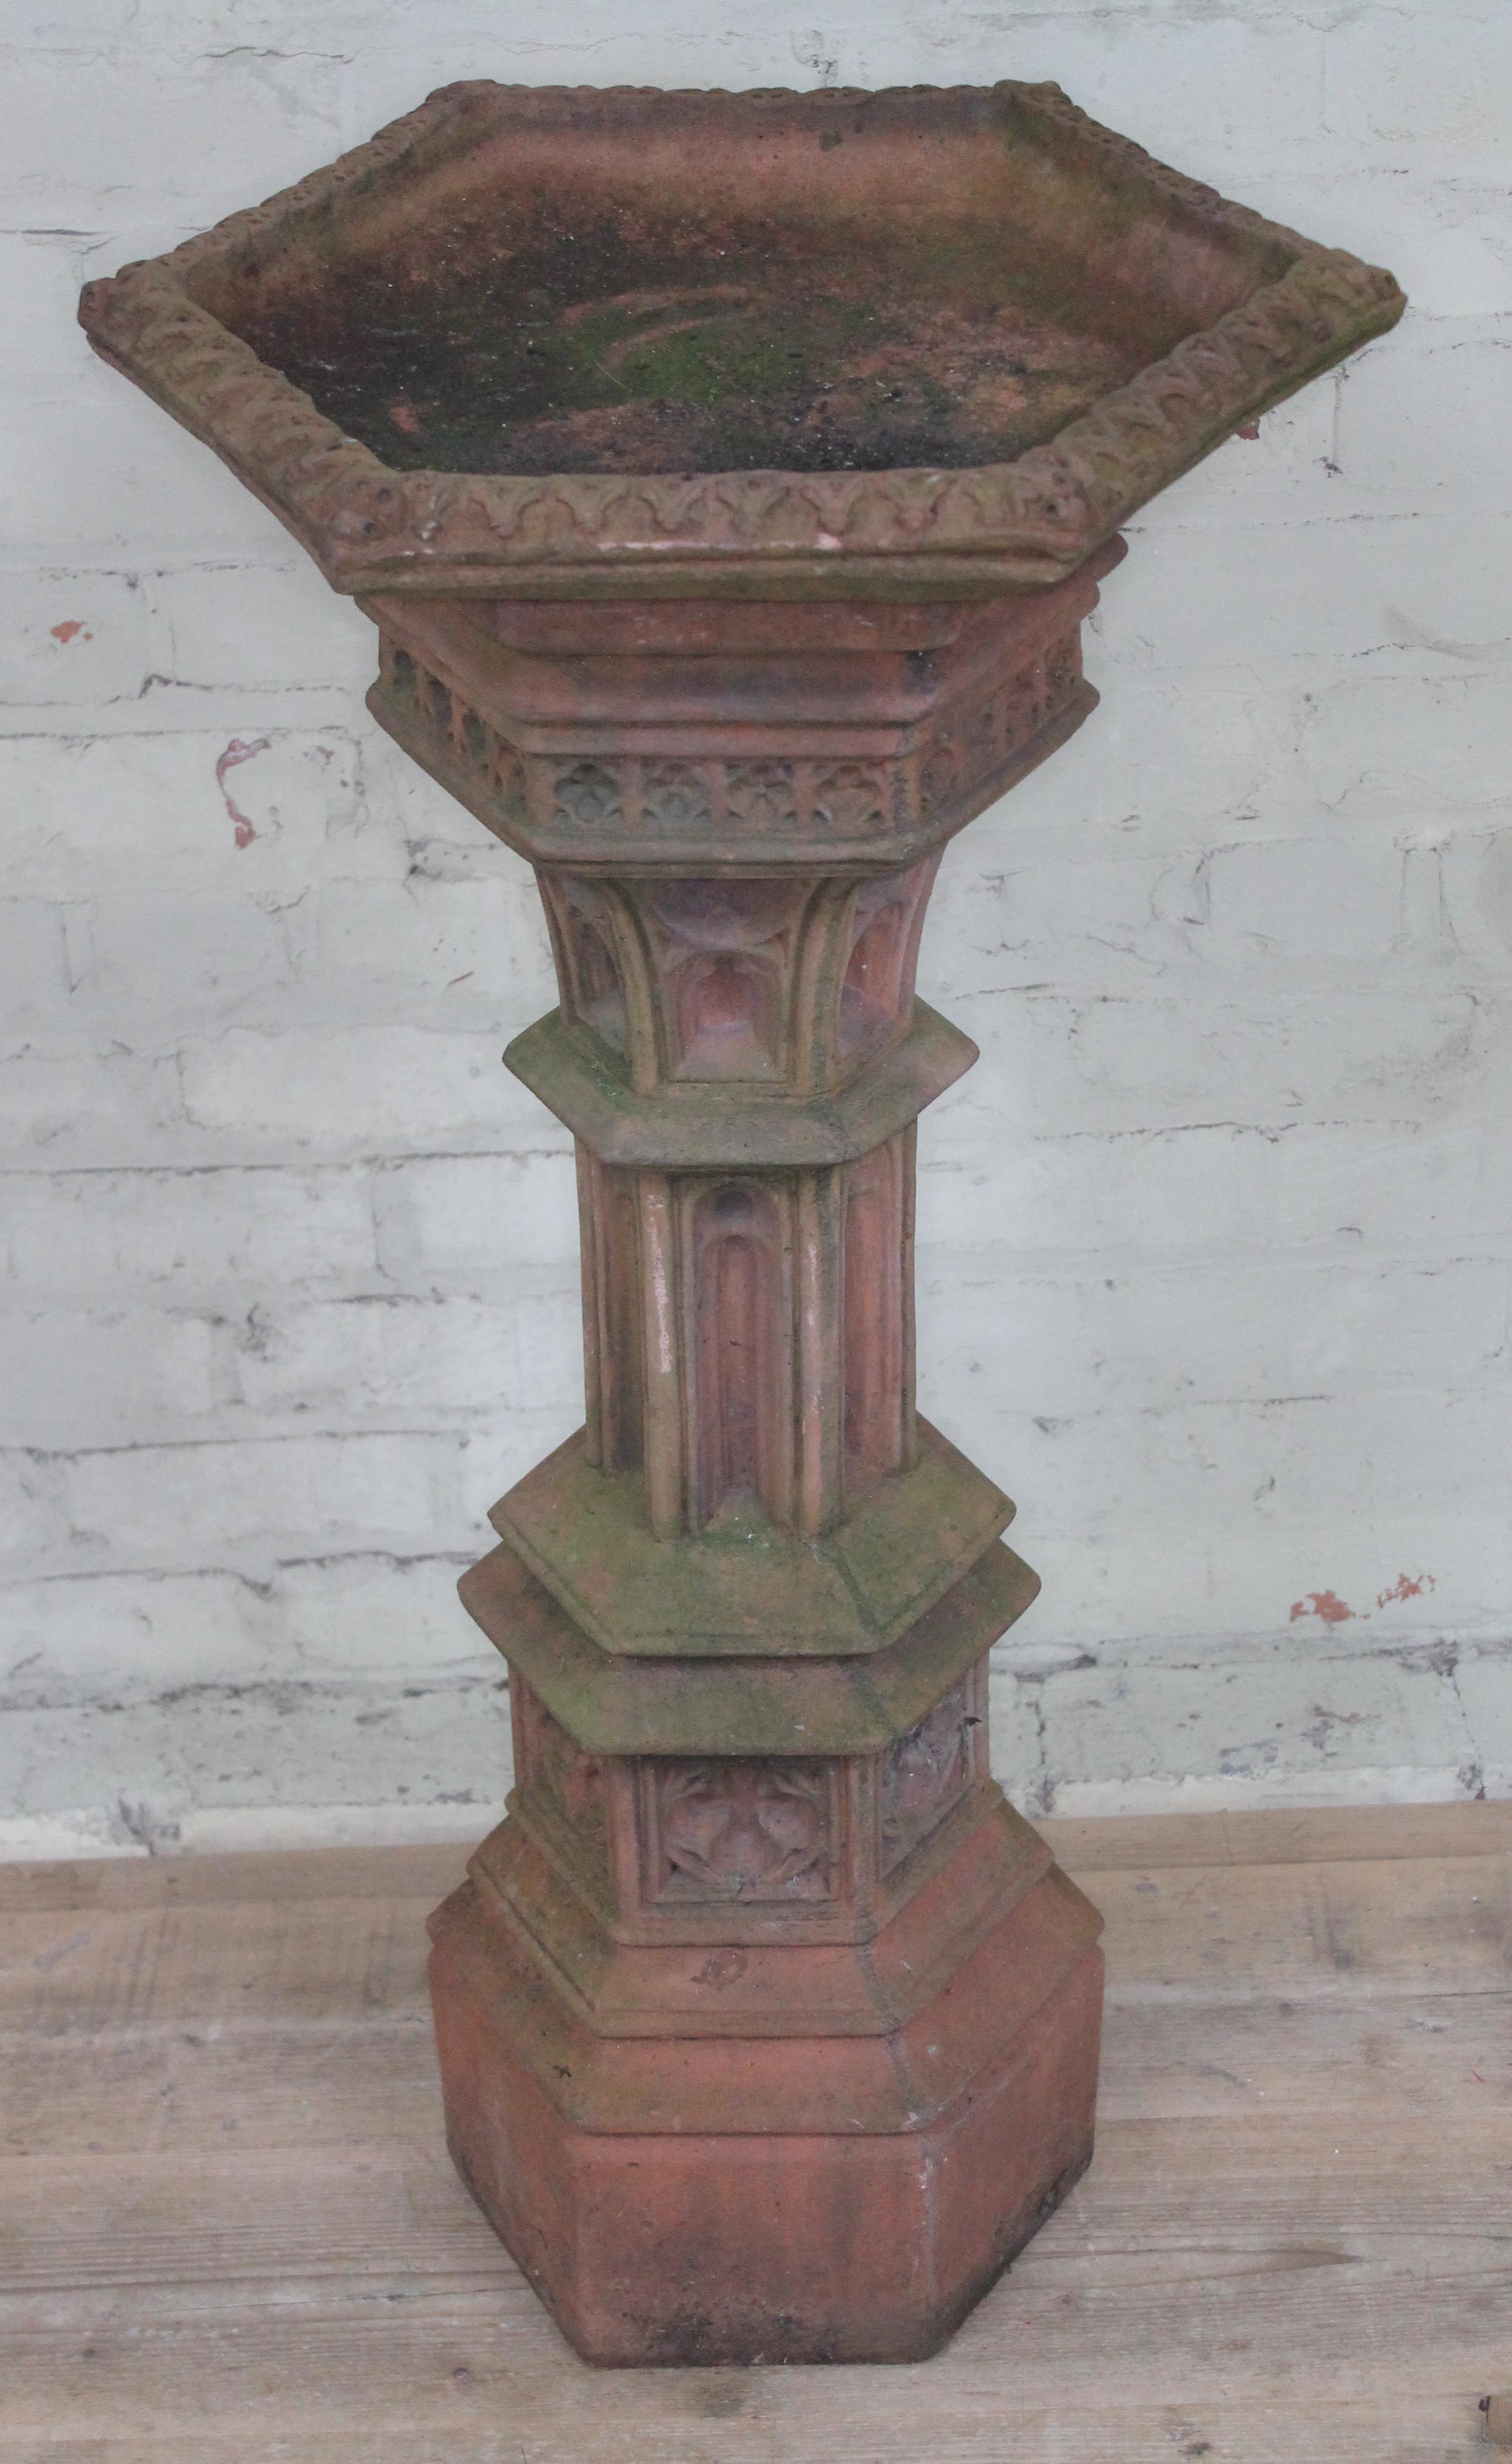 A terracotta coloured concrete bird bath of Gothic hexagonal column form, height 99cm.